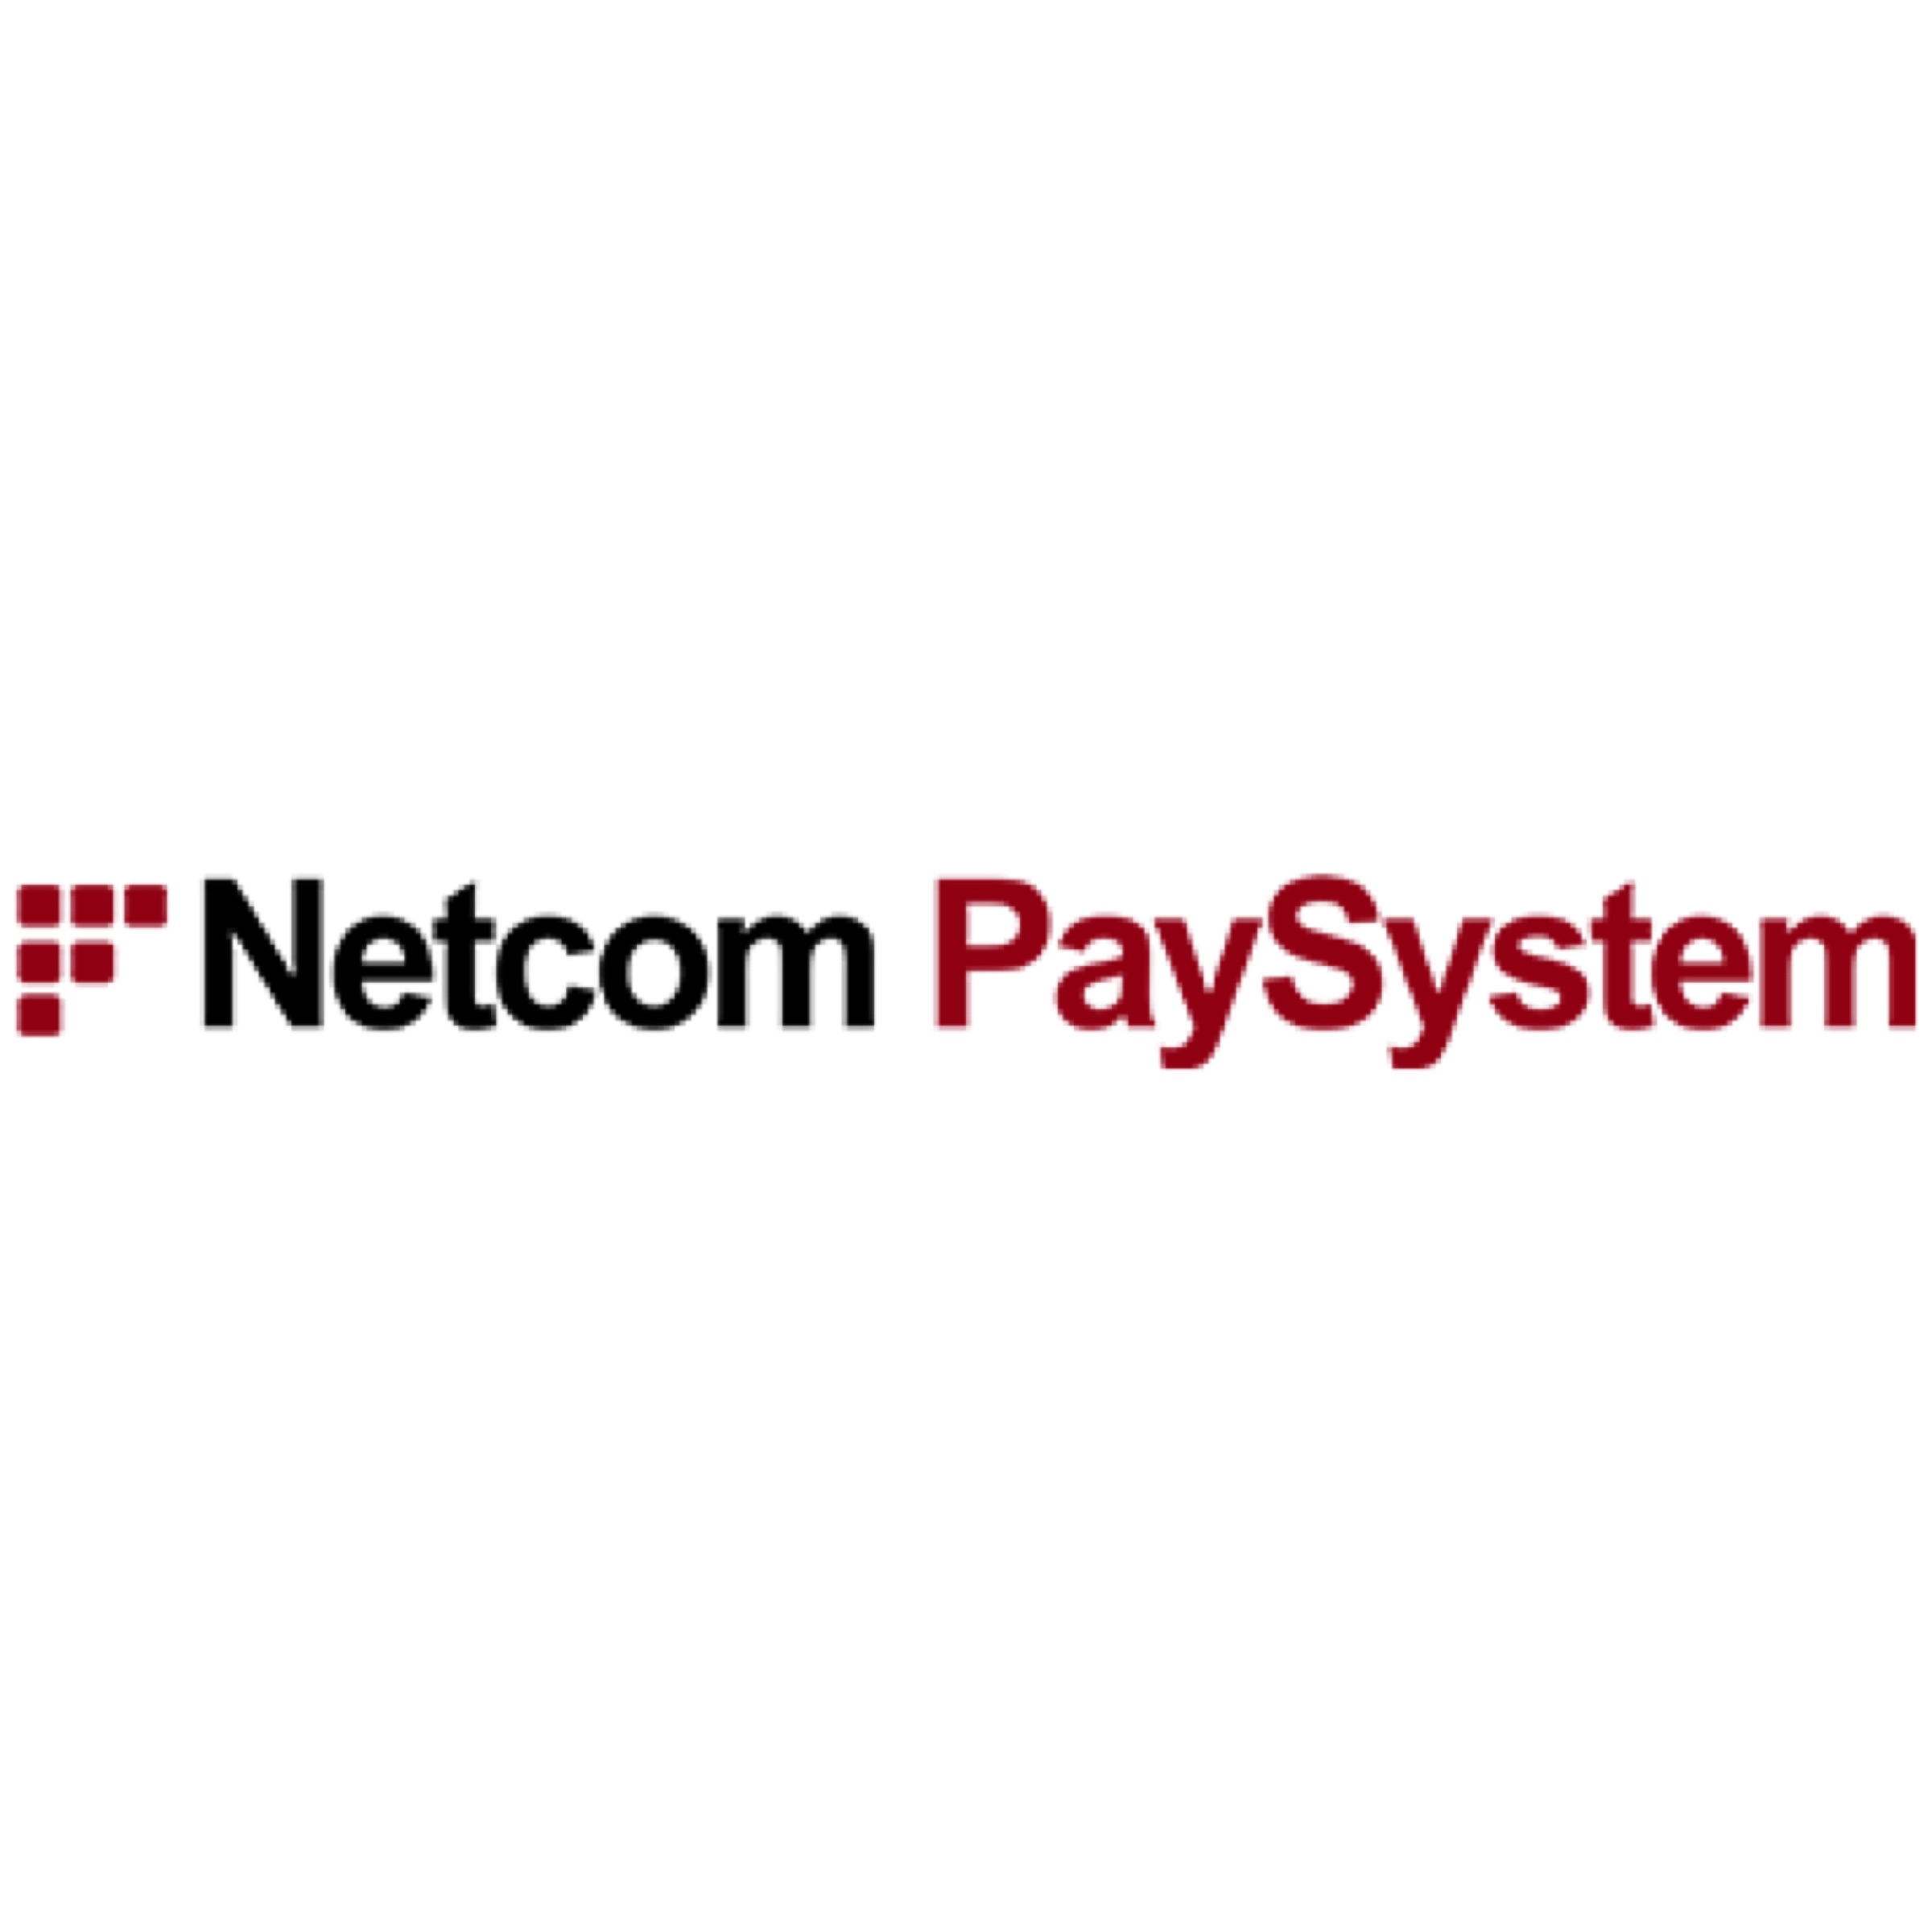 Netcom Pay System